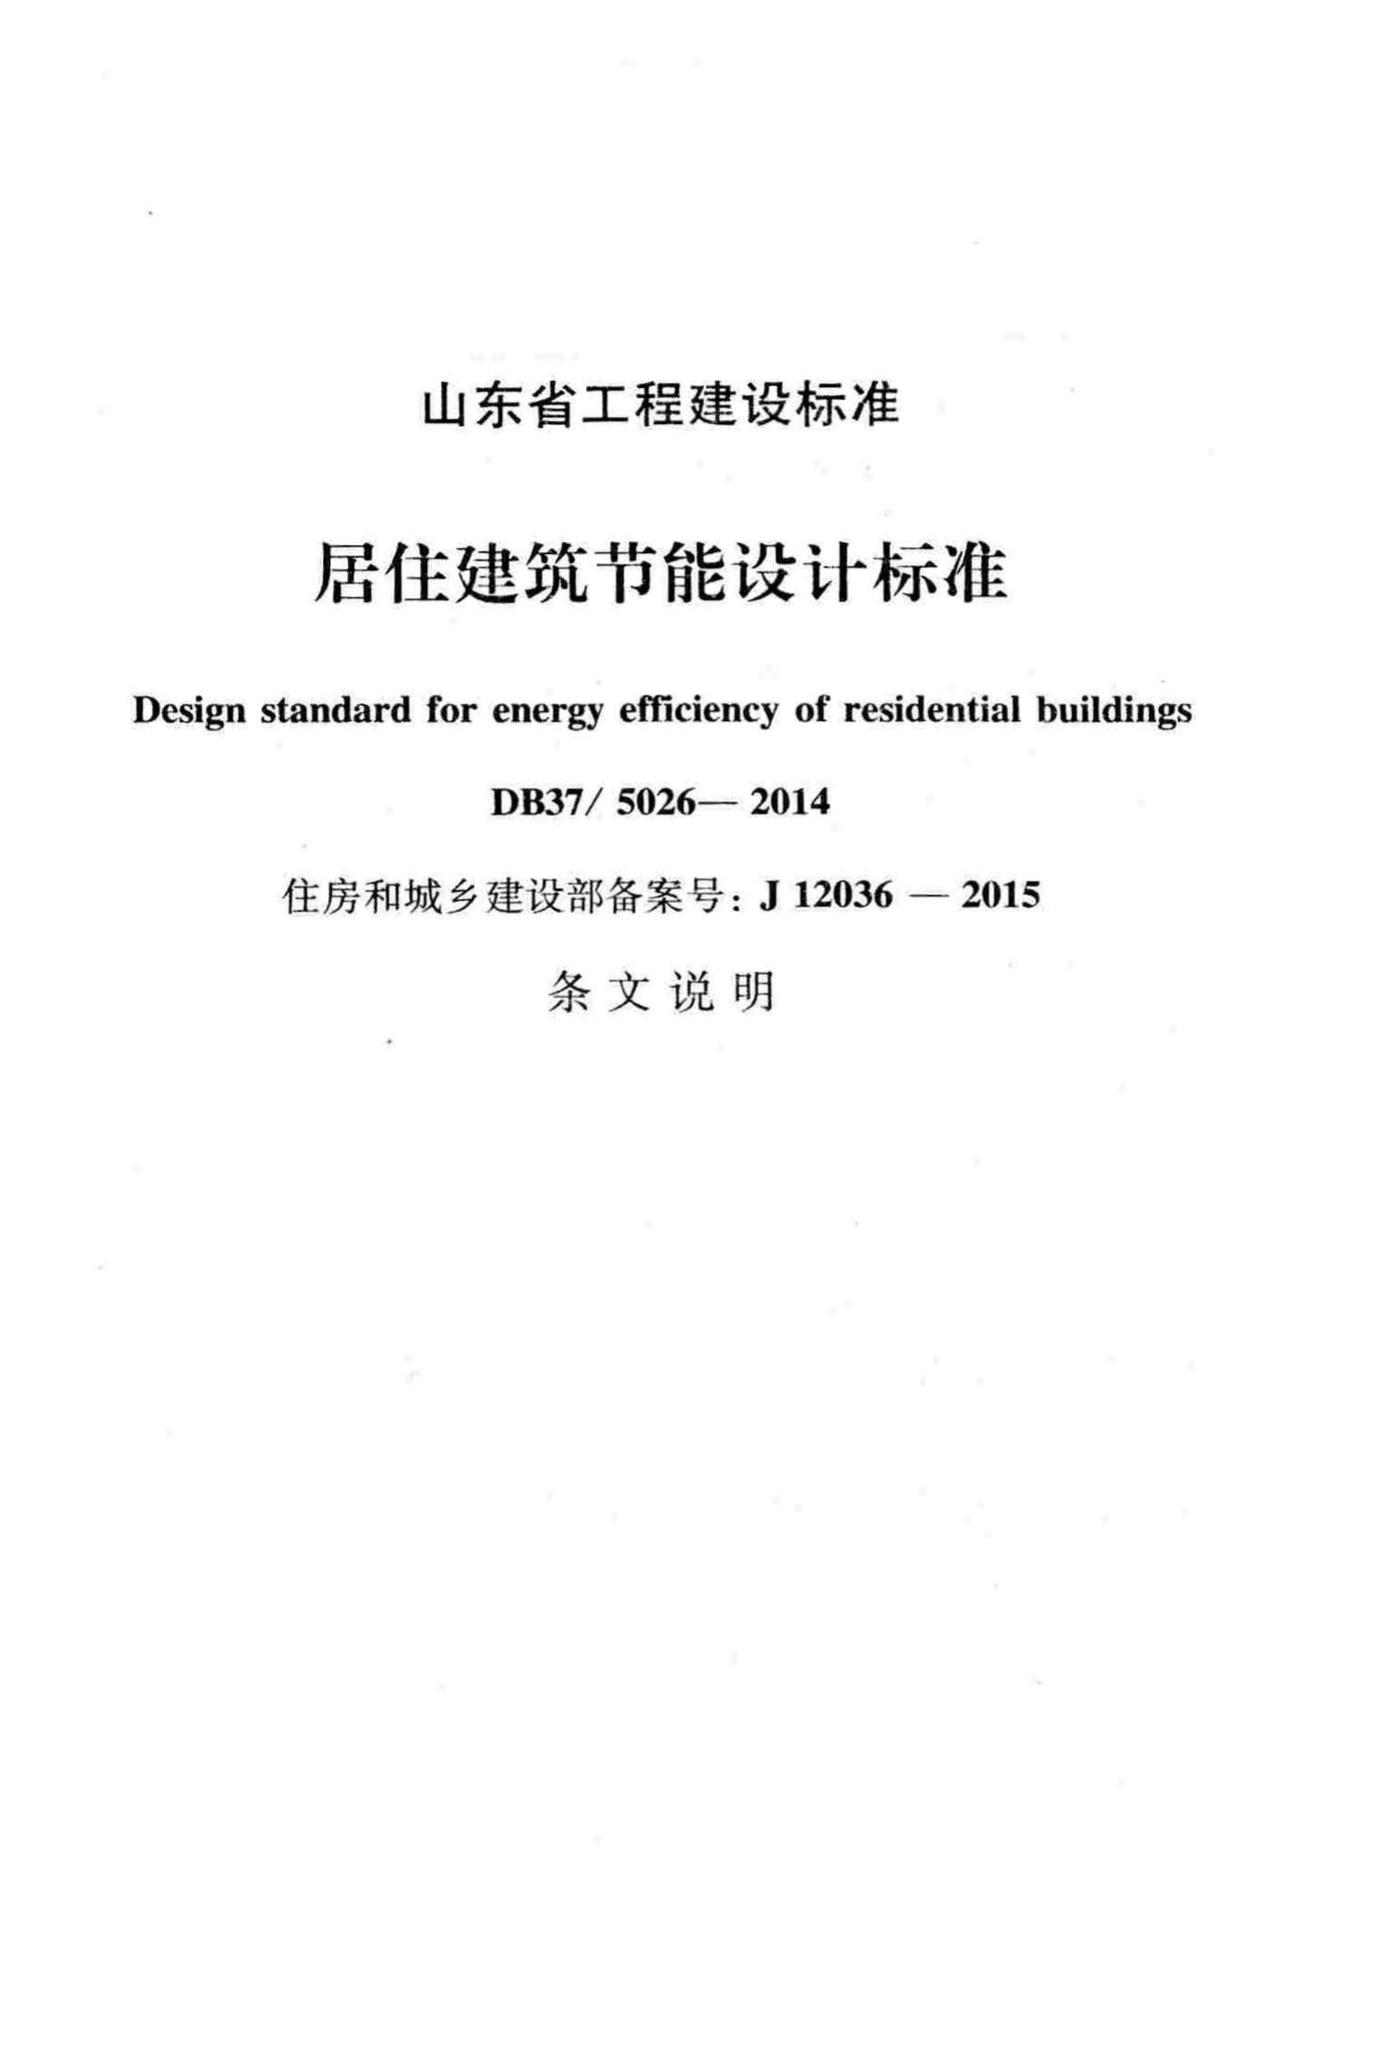 DB37/5026-2014,居住建筑节能,专业建筑博客